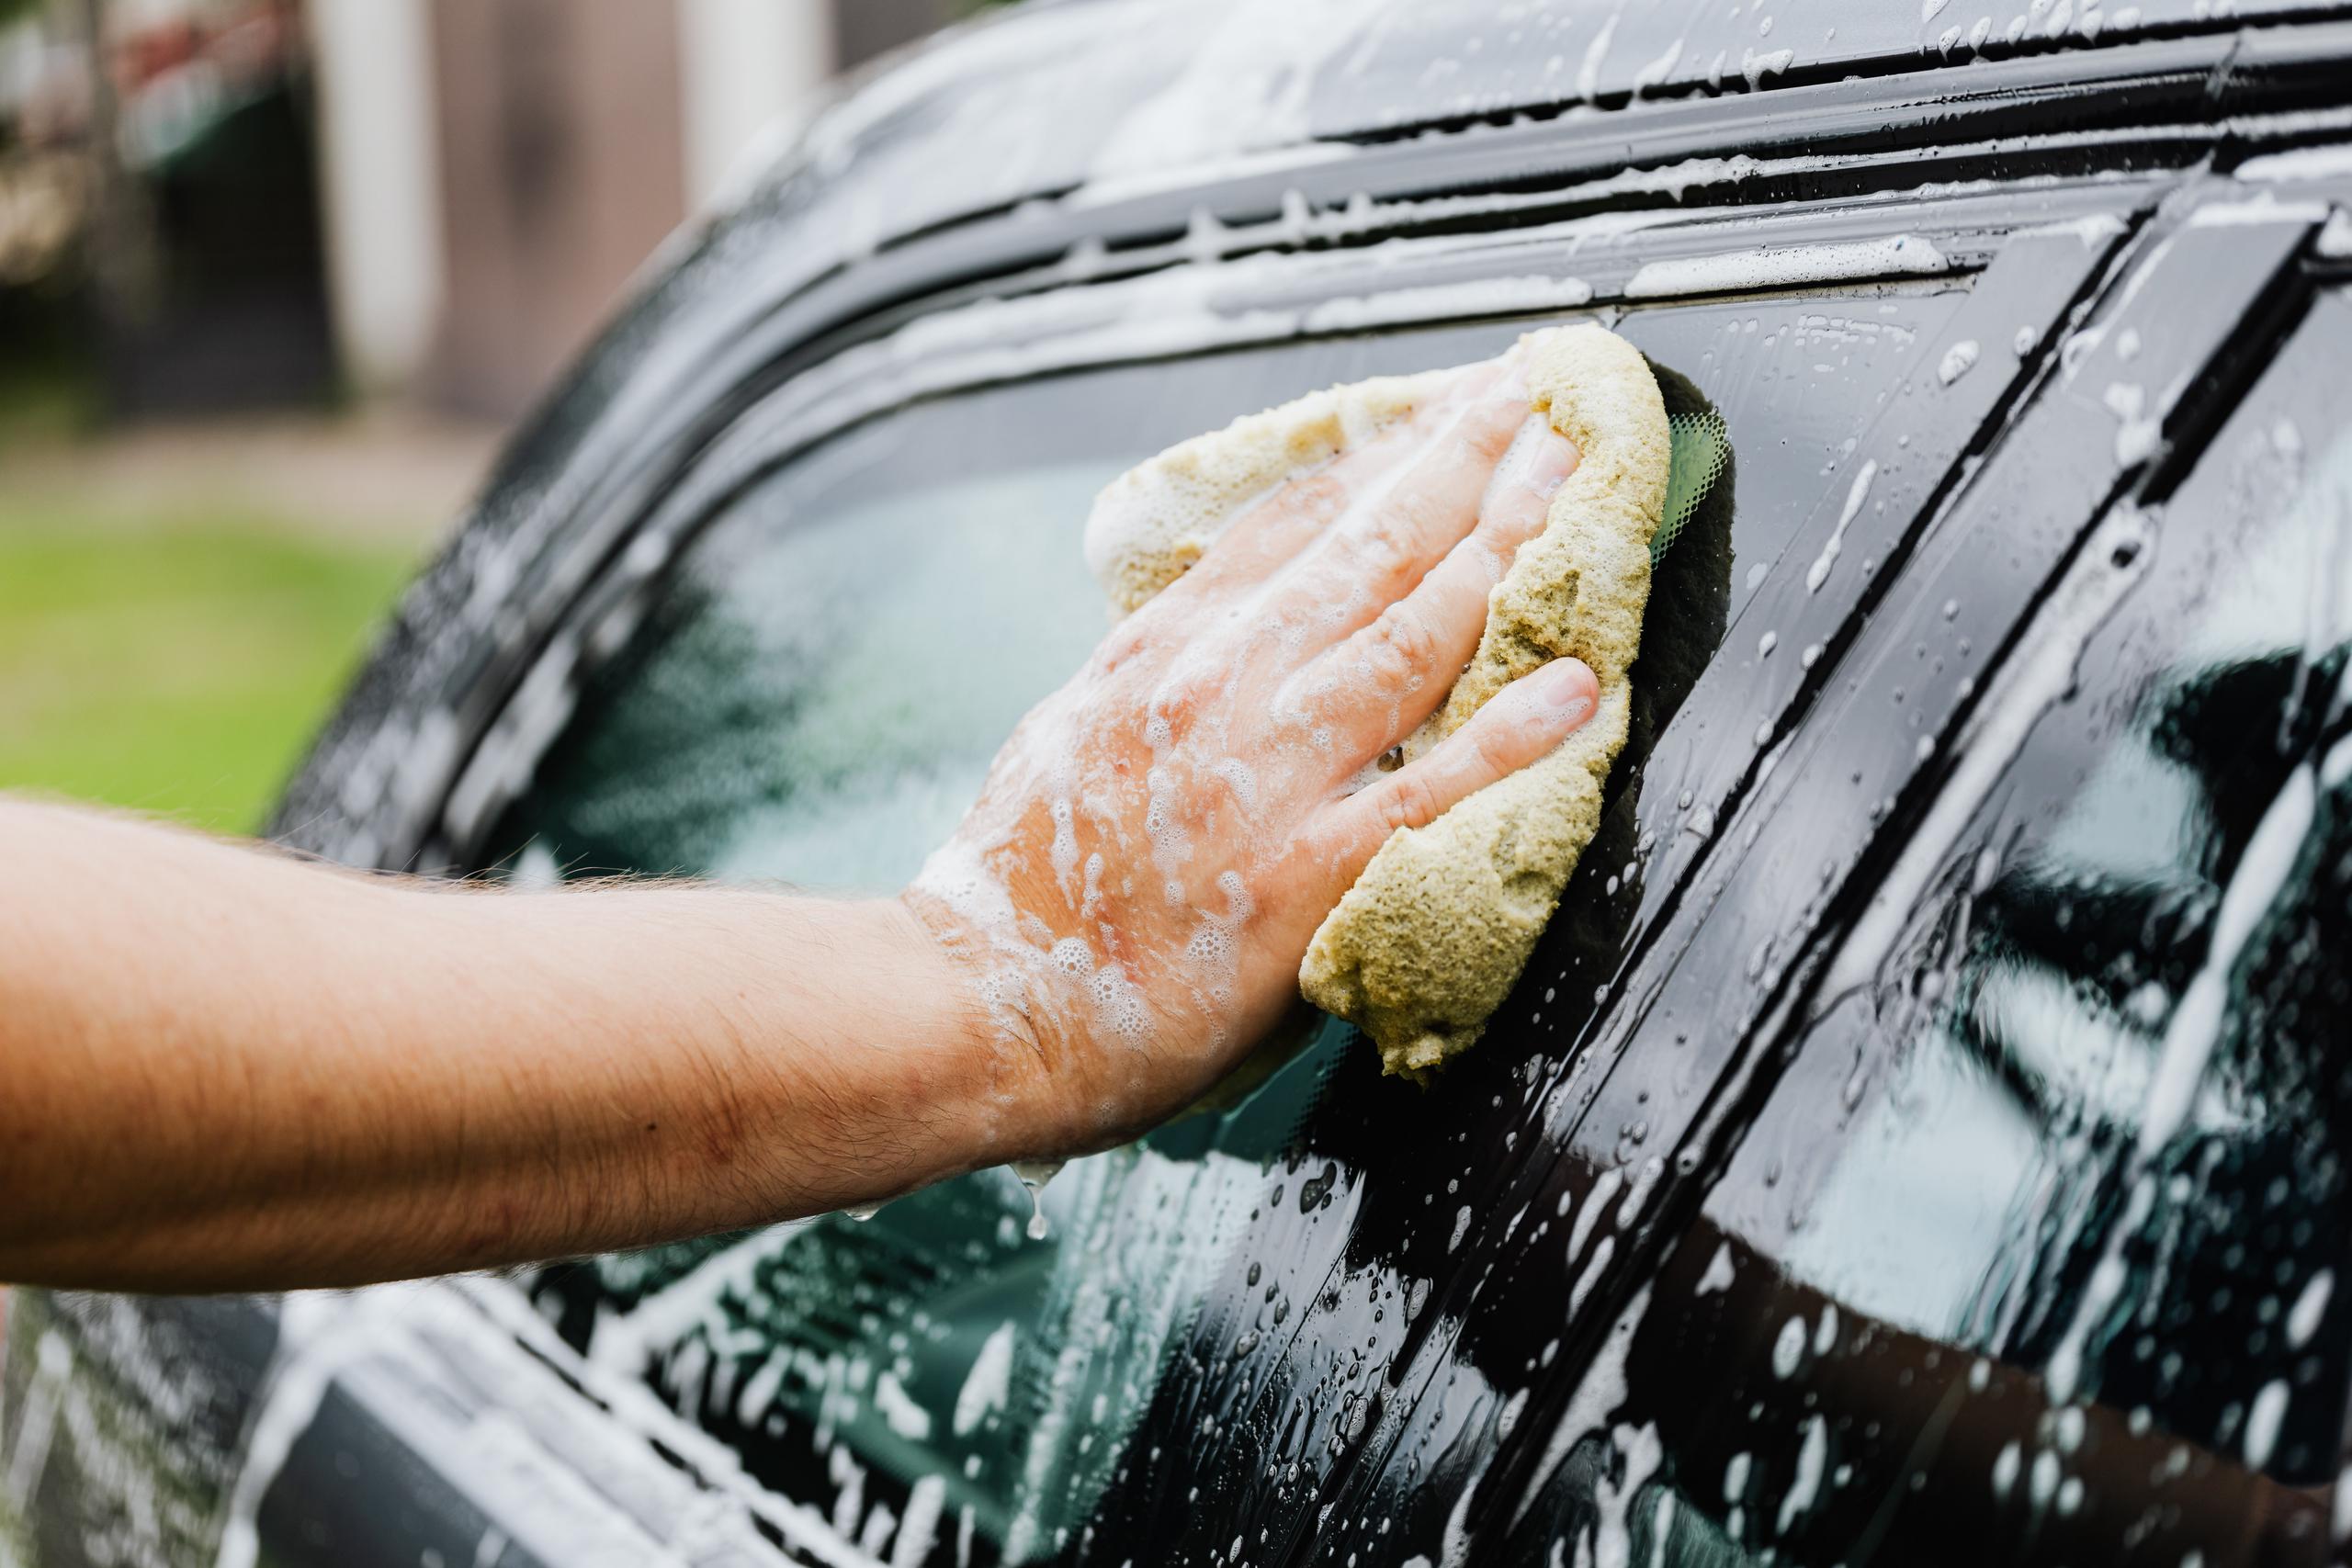 Car Wheel Wash Brush Auto Cleaning Brush FOR SEAT Ibiza Leon